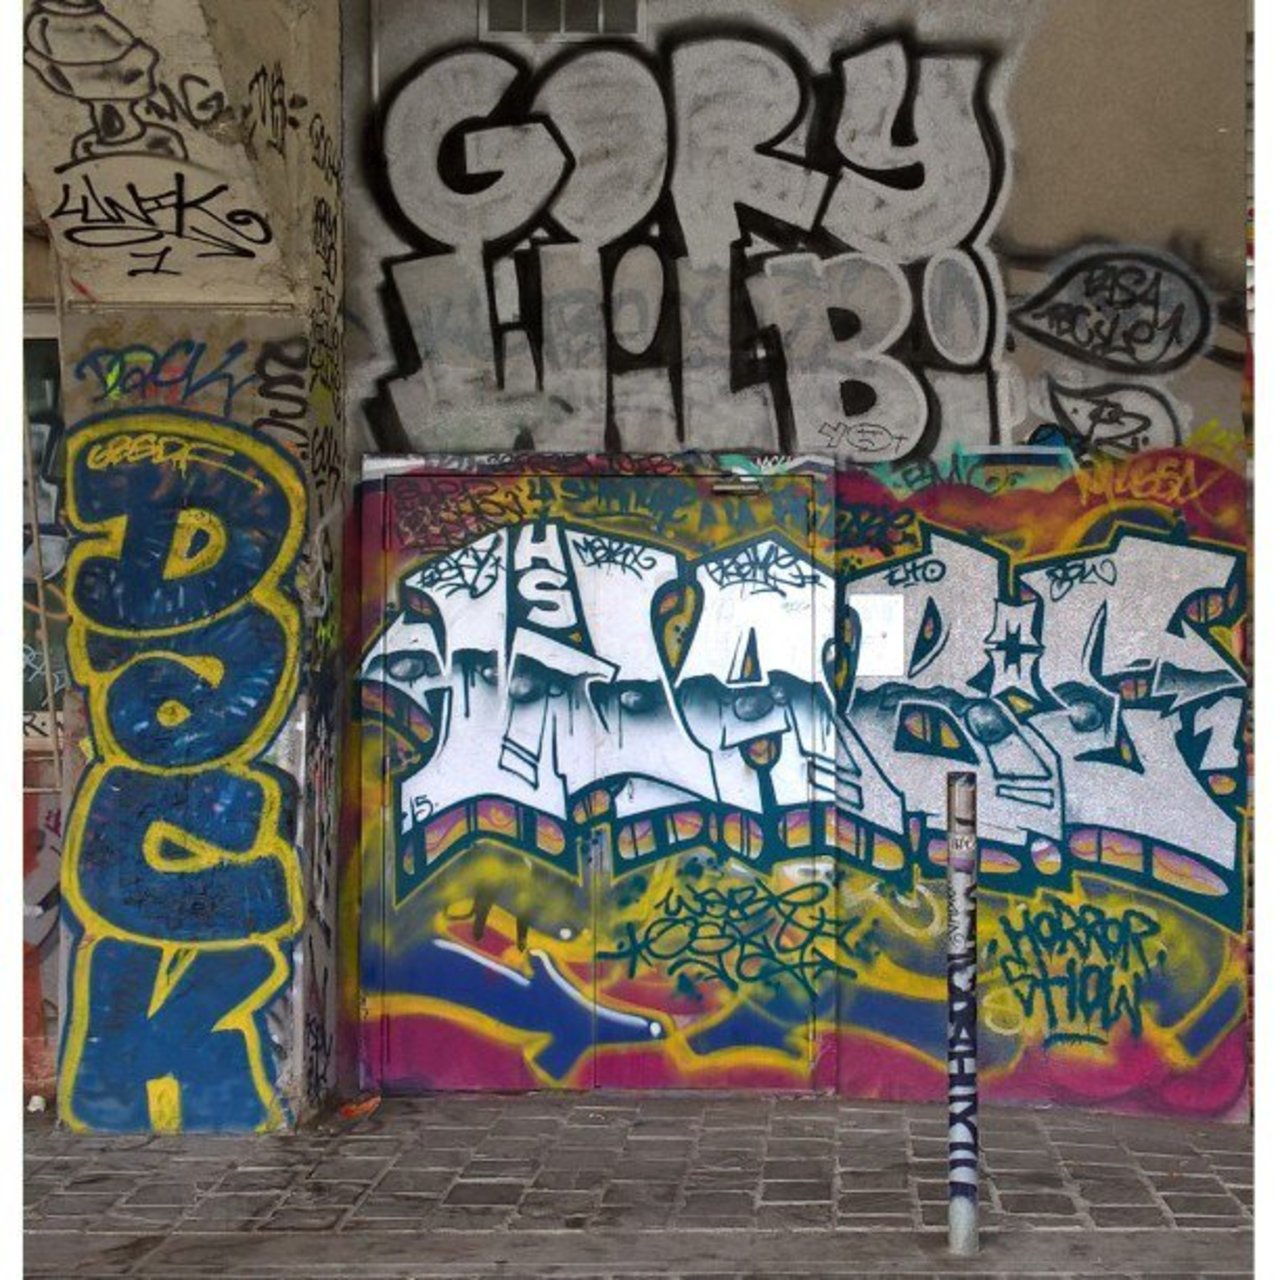 #streetart #graffiti #graff #art #fatcap #bombing #sprayart #spraycanart #wallart #handstyle #lettering #urbanart #… https://t.co/7lh8GCT53Y